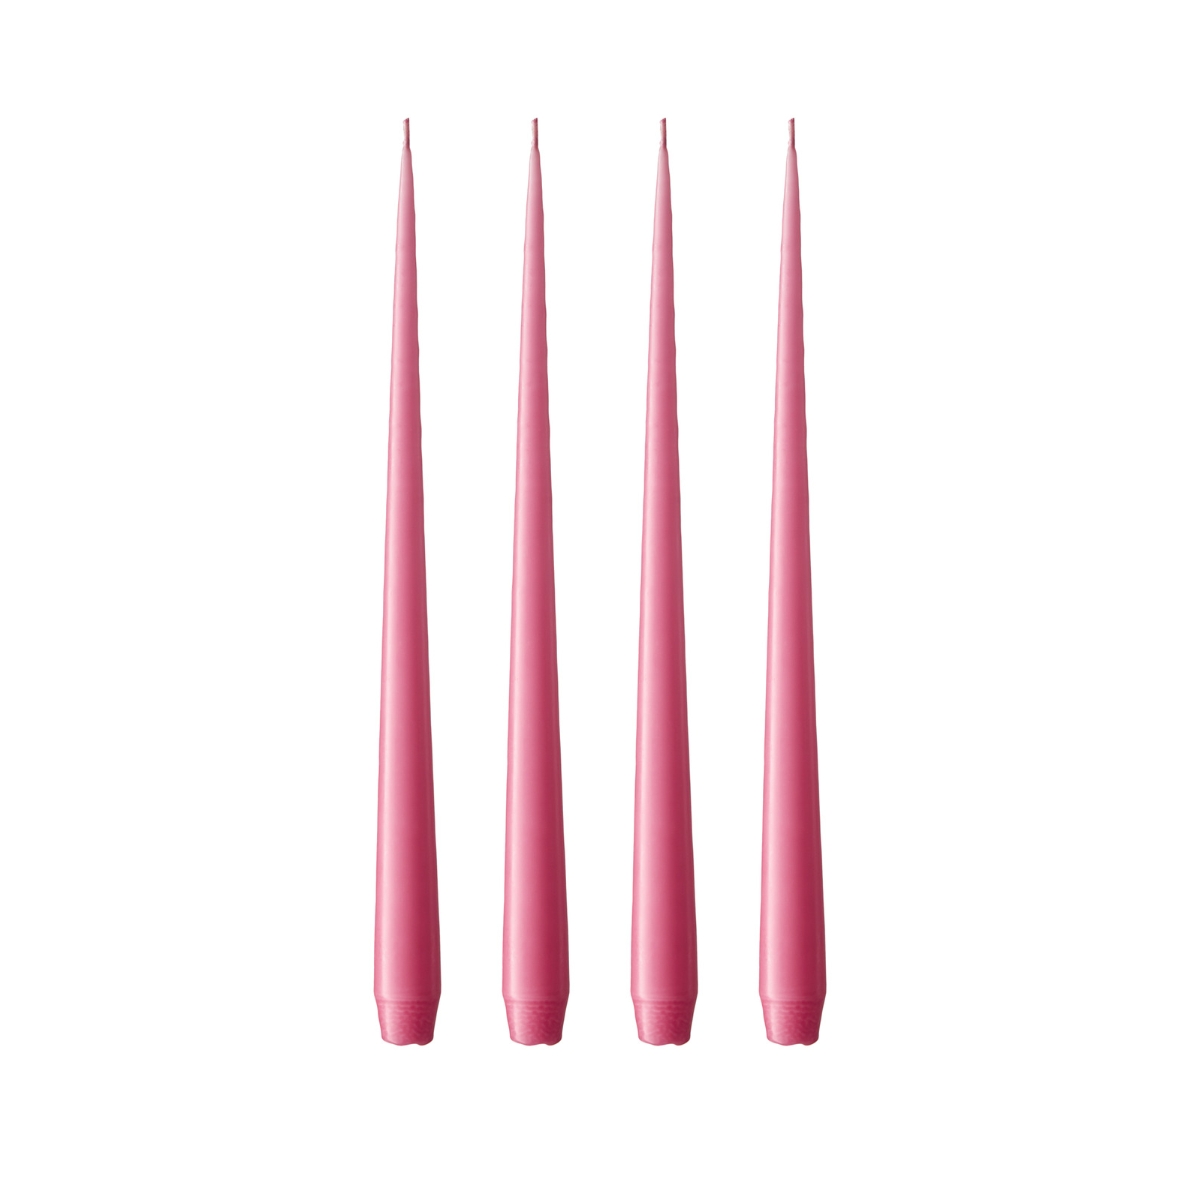 Ester & Erik Clear Pink Tapered Dinner Candles - Set of 4